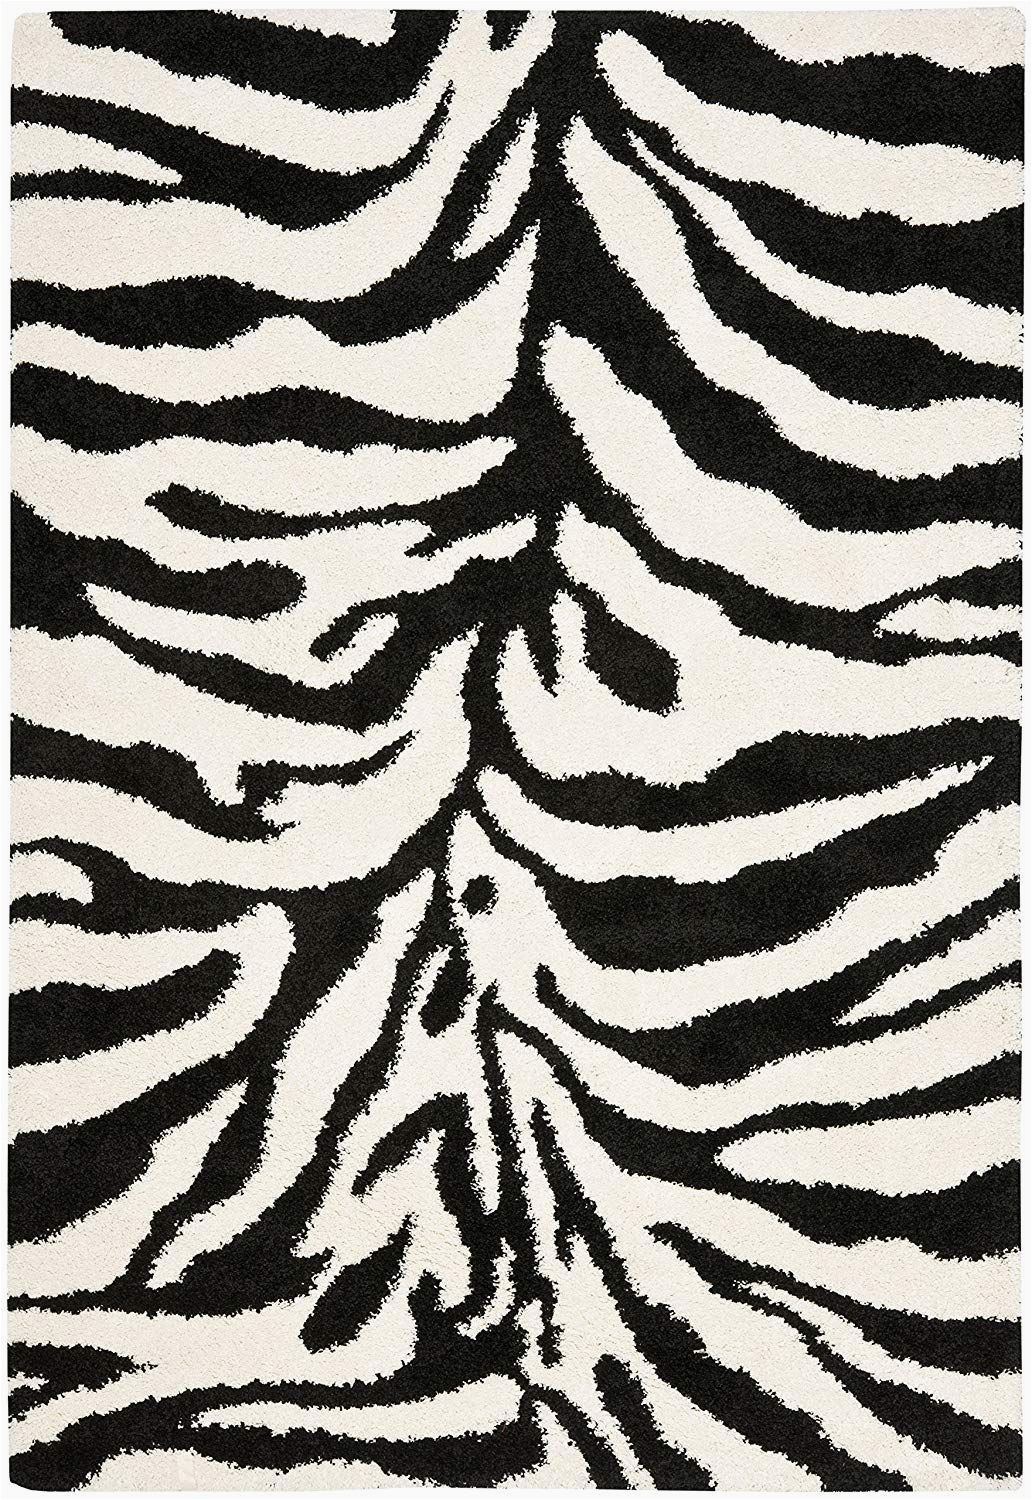 Zebra Print area Rug 8×10 Safavieh Zebra Shag Collection Sg452 1290 Ivory and Black